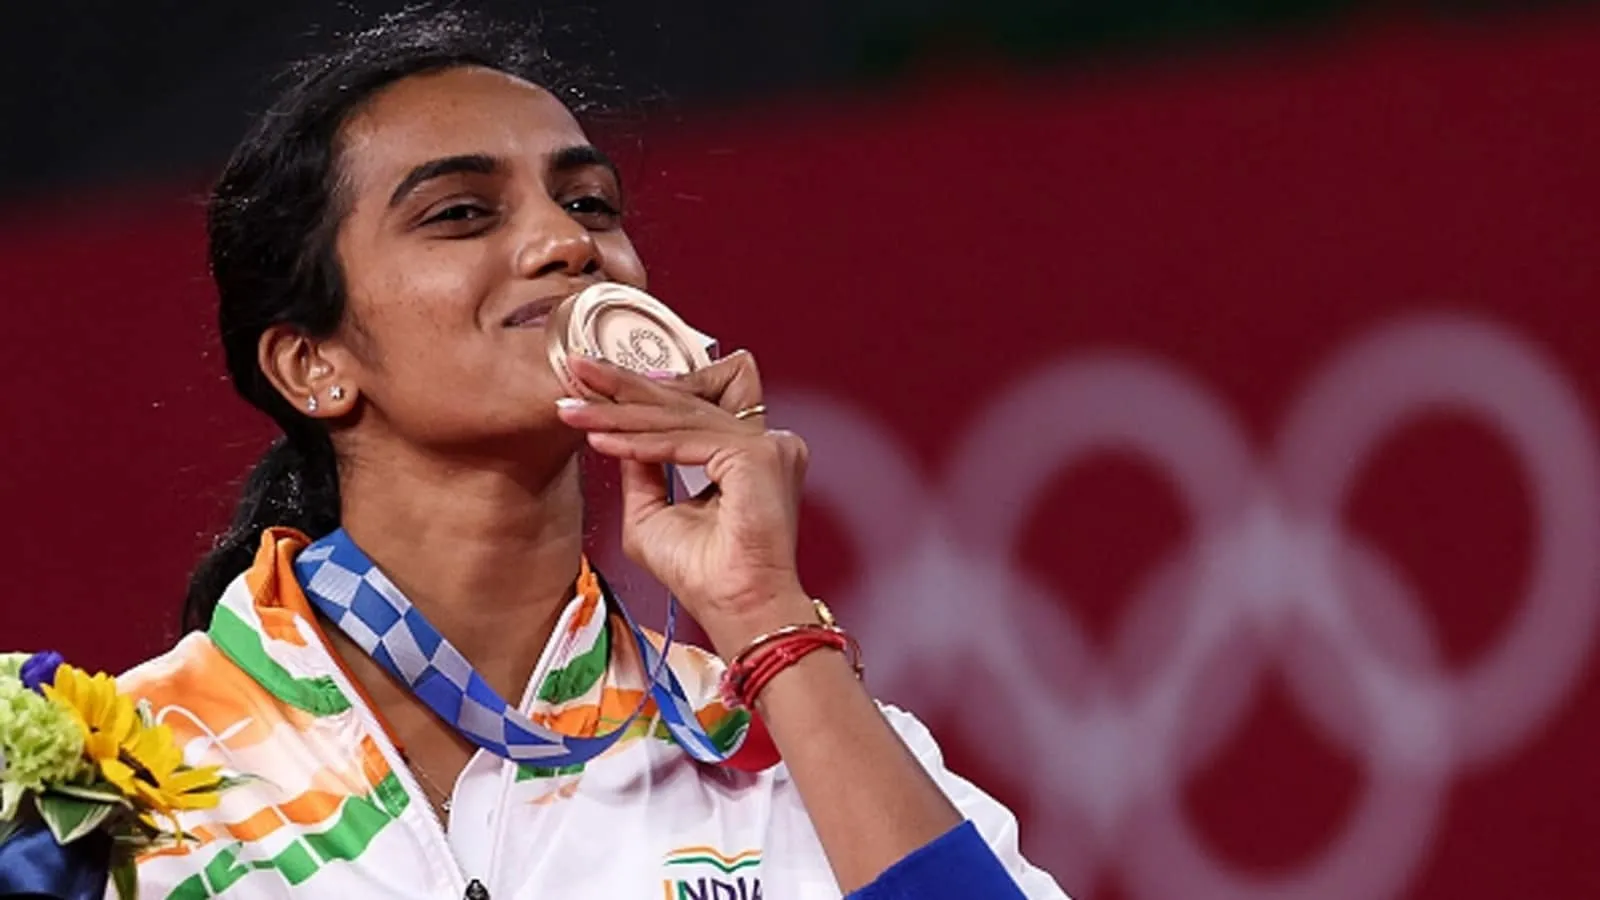 Looking back at India's 7 medals at Tokyo Olympics 2020